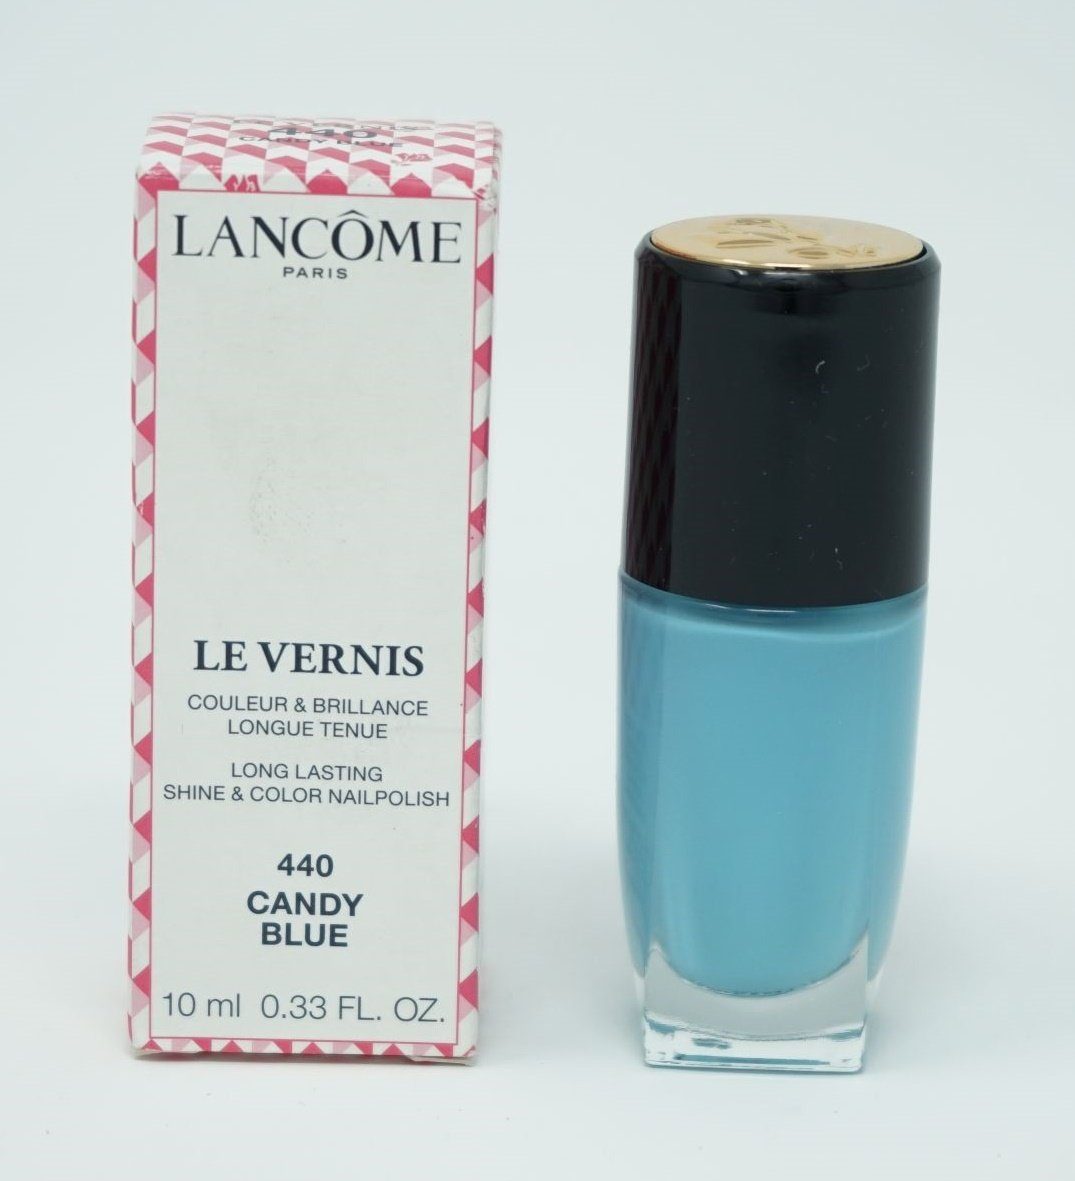 LANCOME Nagellack Lancome Blue lasting long 10ml Candy 440 Nagellack Le Vernis